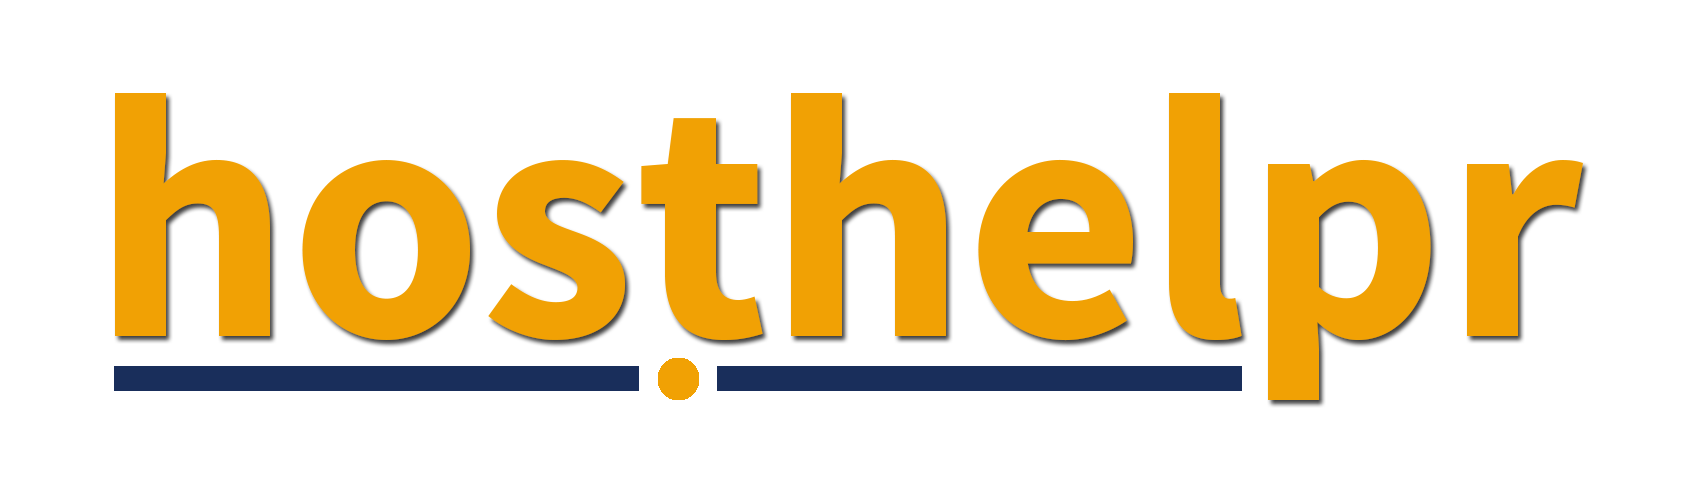 HostHelpr logo